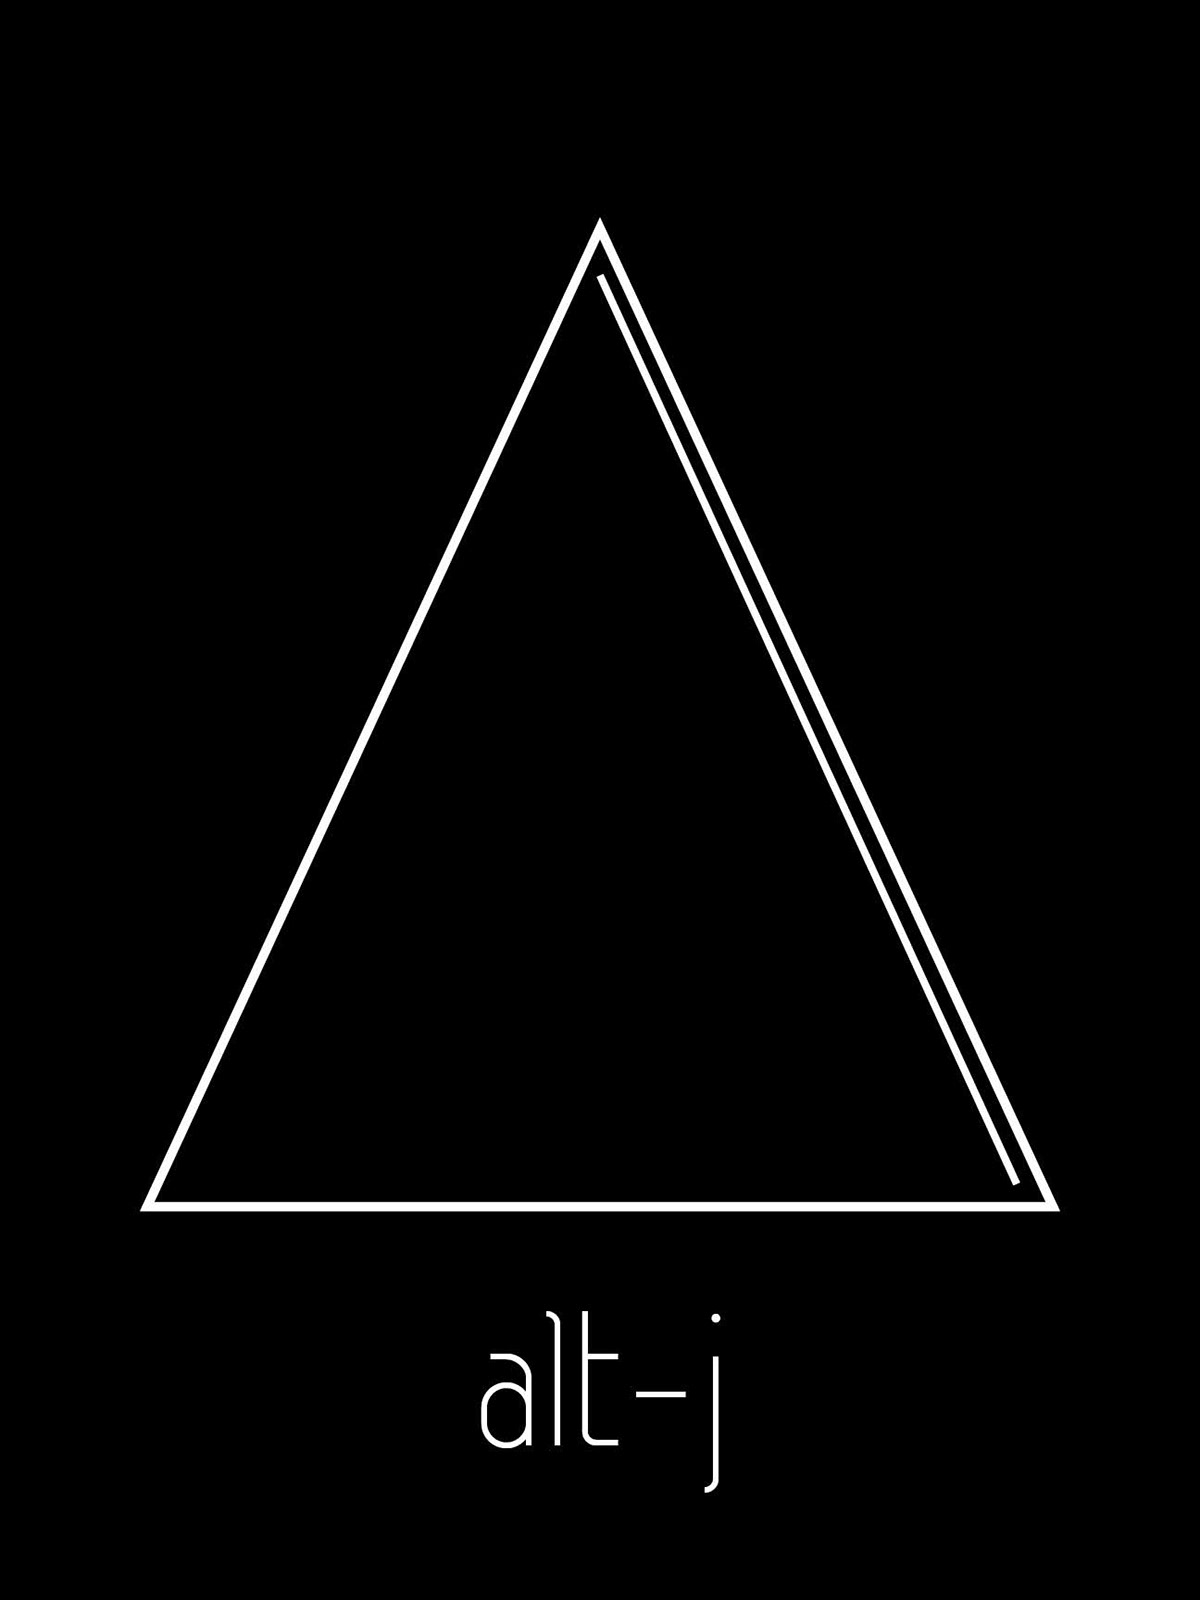 alt-j poster justforfun collage minimal triangle photo simple